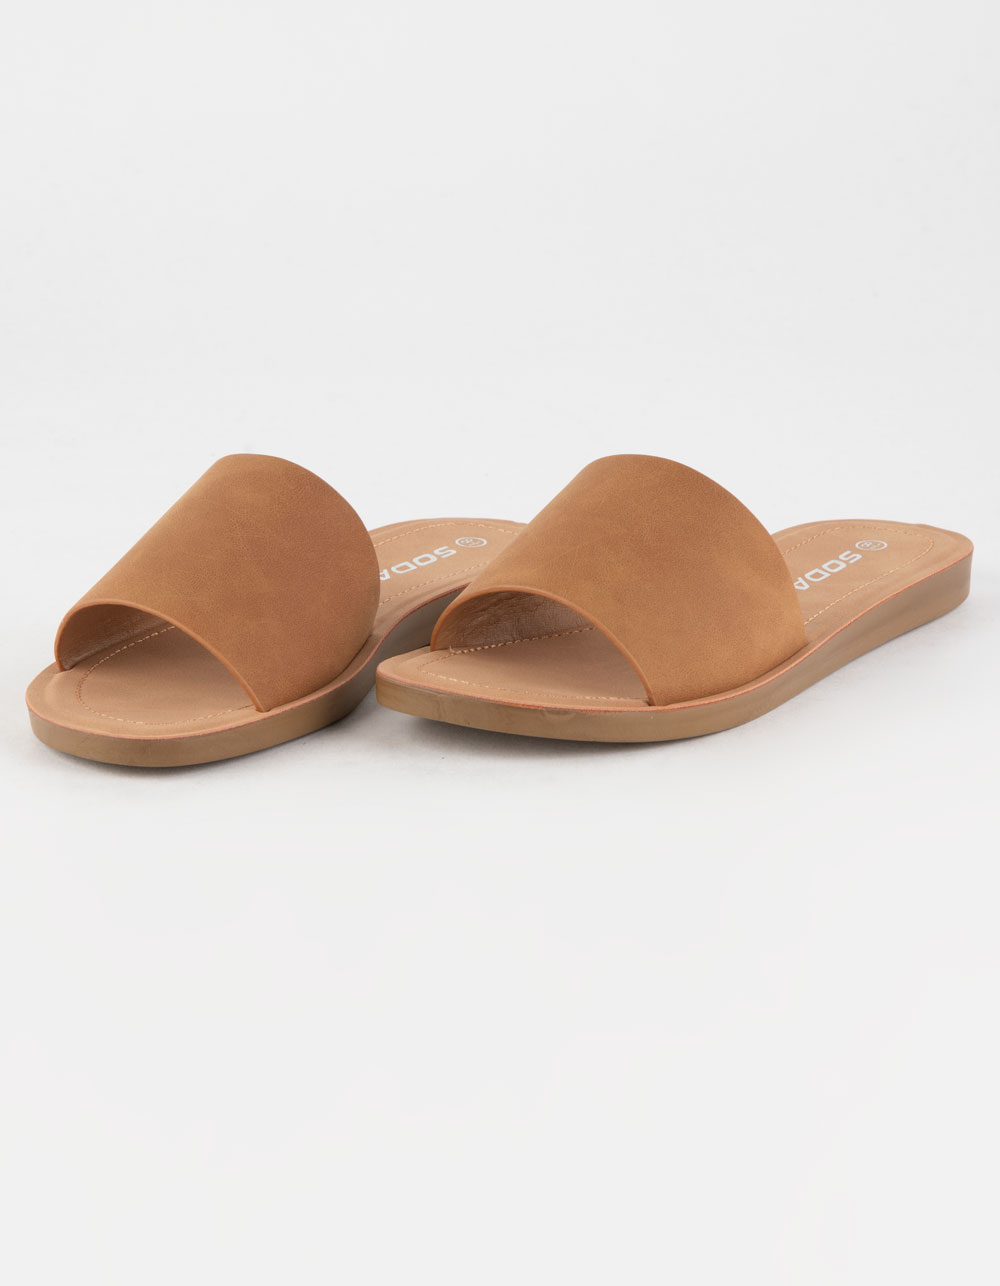 SODA Comfort Womens Slide Sandals